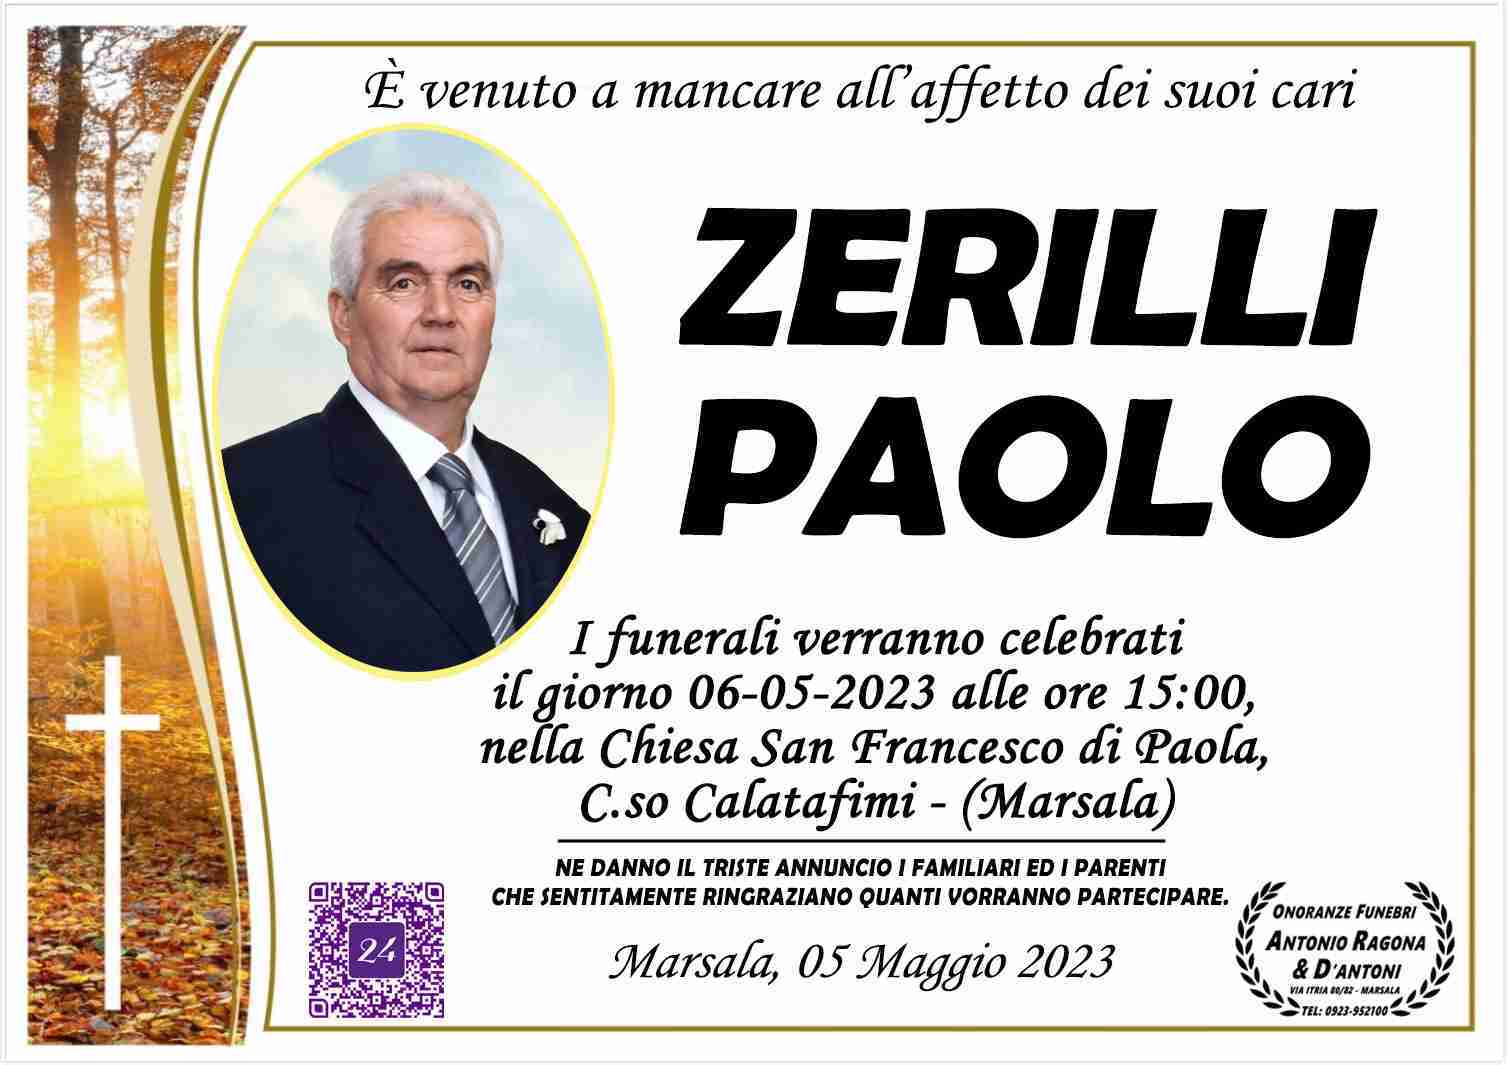 Paolo Zerilli